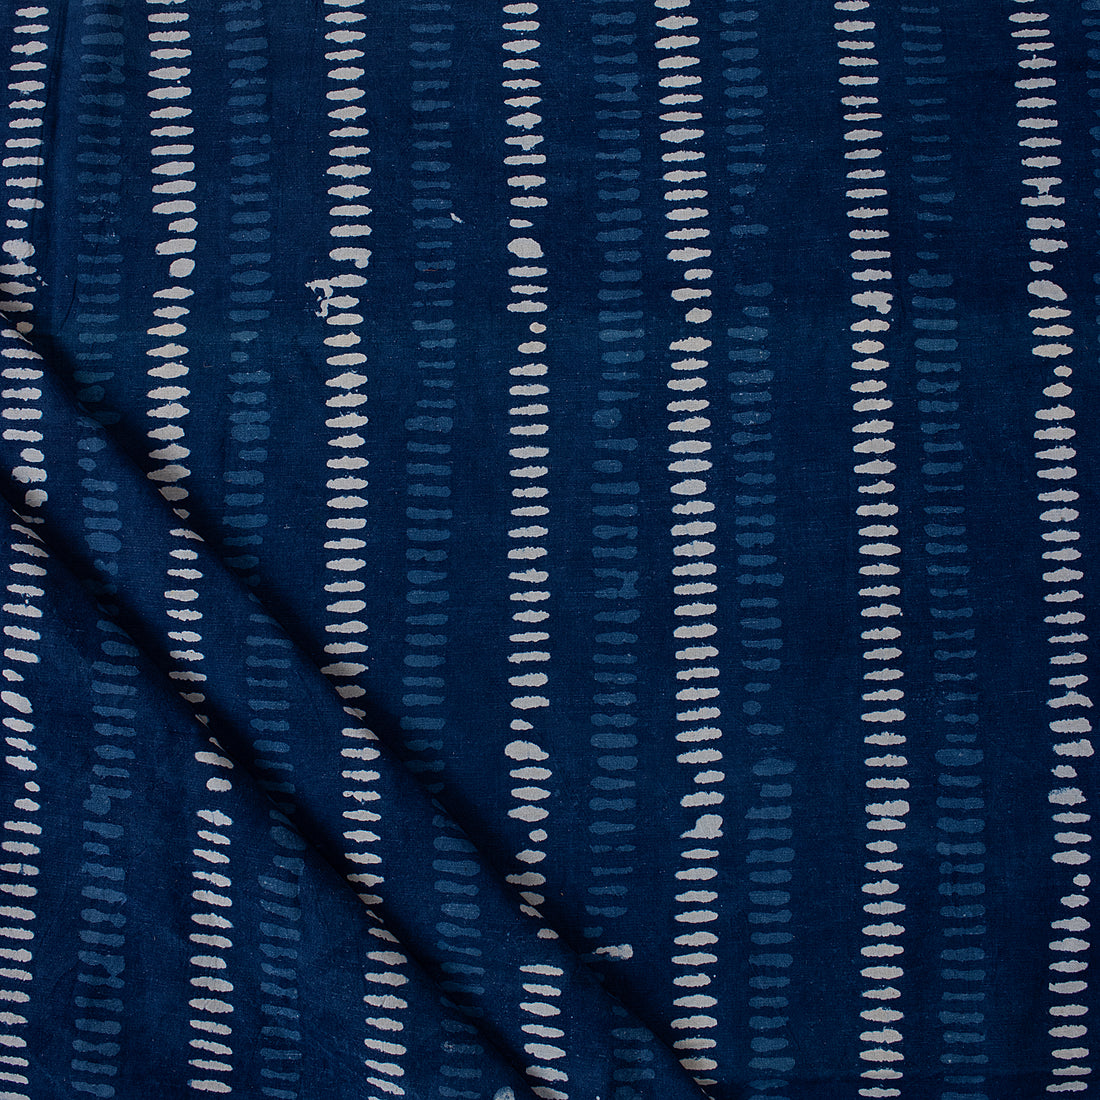 Striped Indigo Block Print Fabric